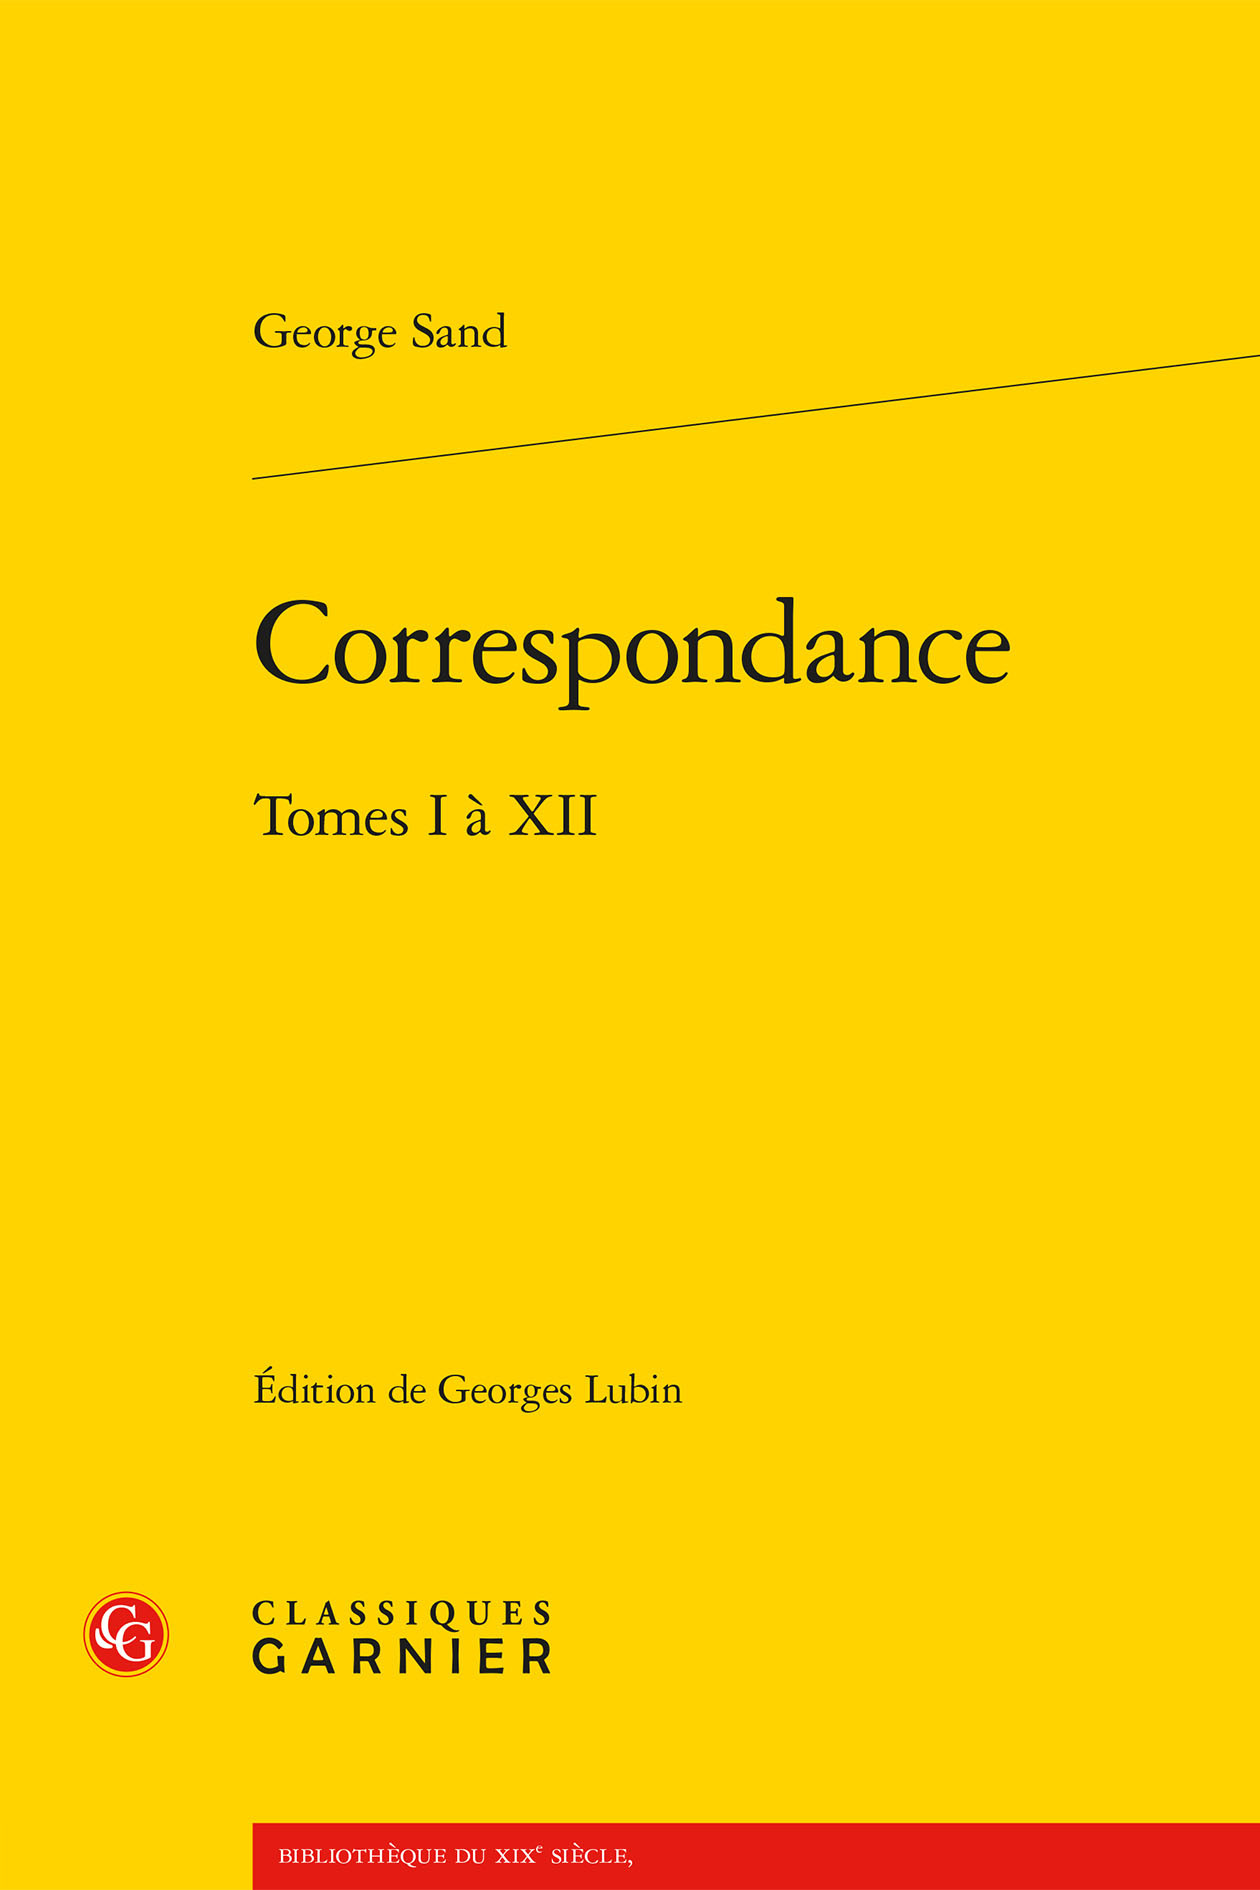 Correspondance (9782406121923-front-cover)